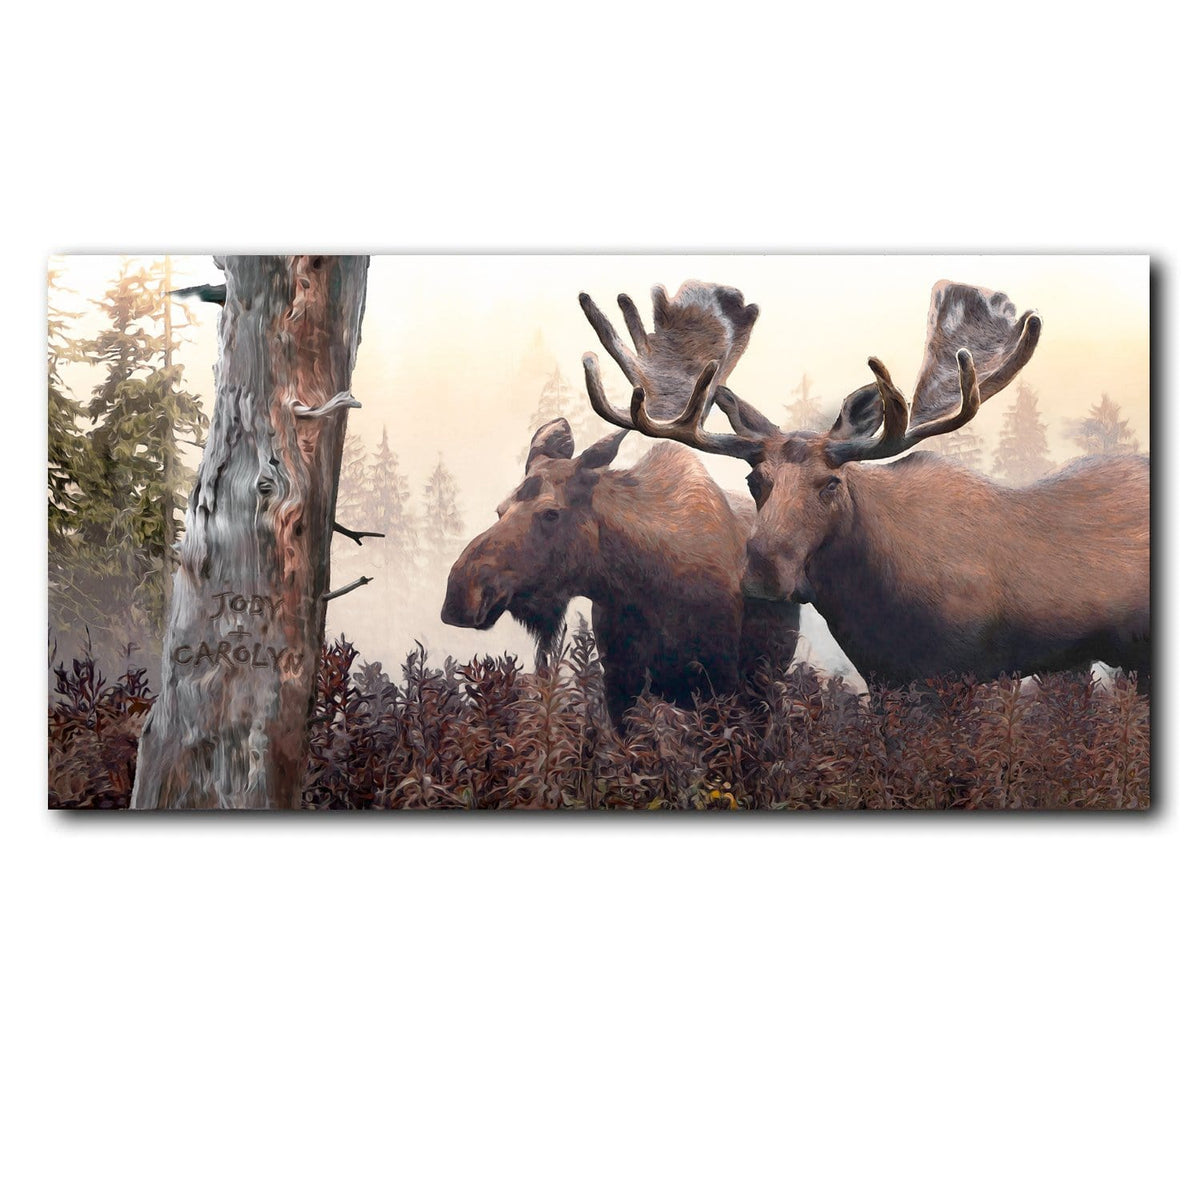 Alaskan moose wall decor - block mount option